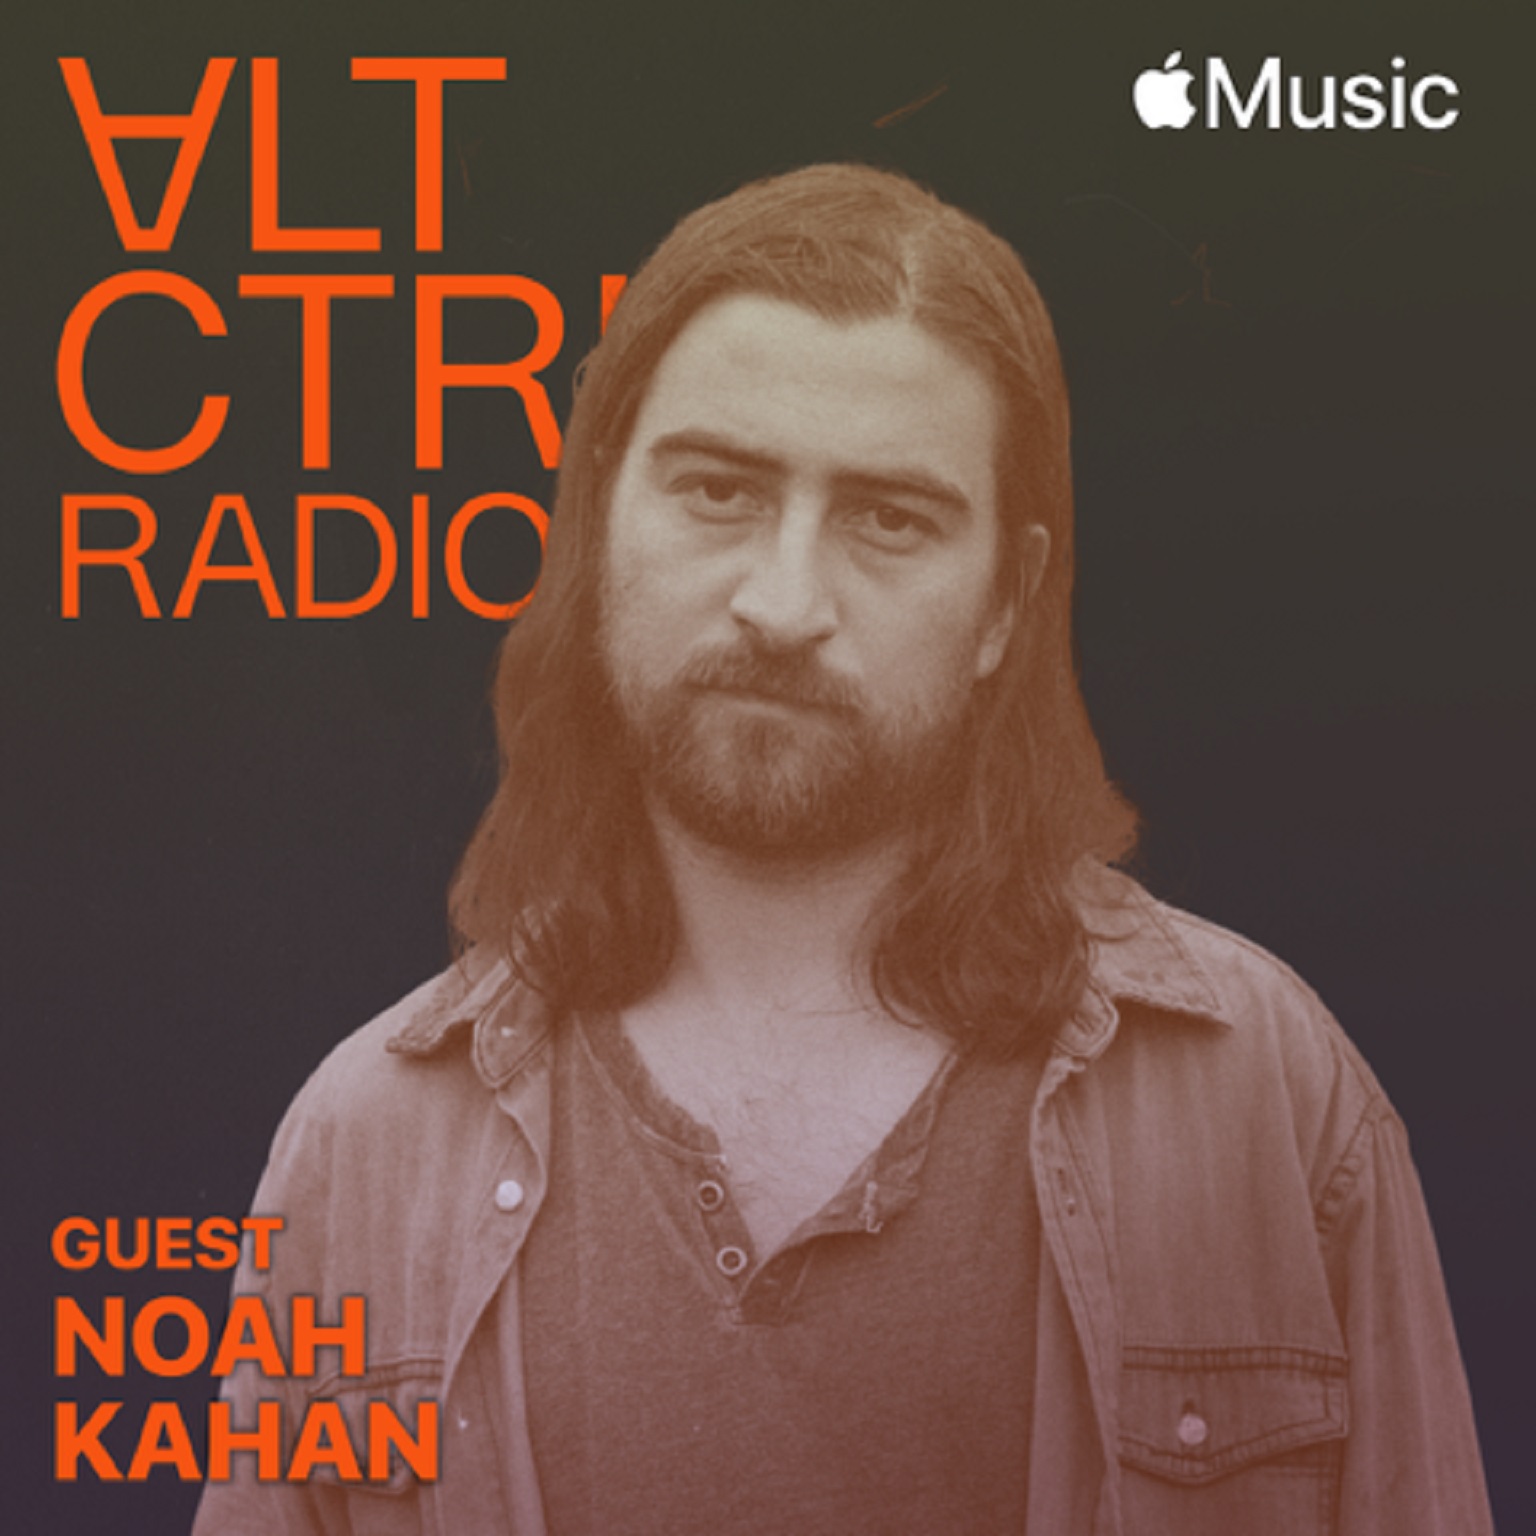 Noah Kahan Talks Apple Music About The New boygenius Album, His Hit